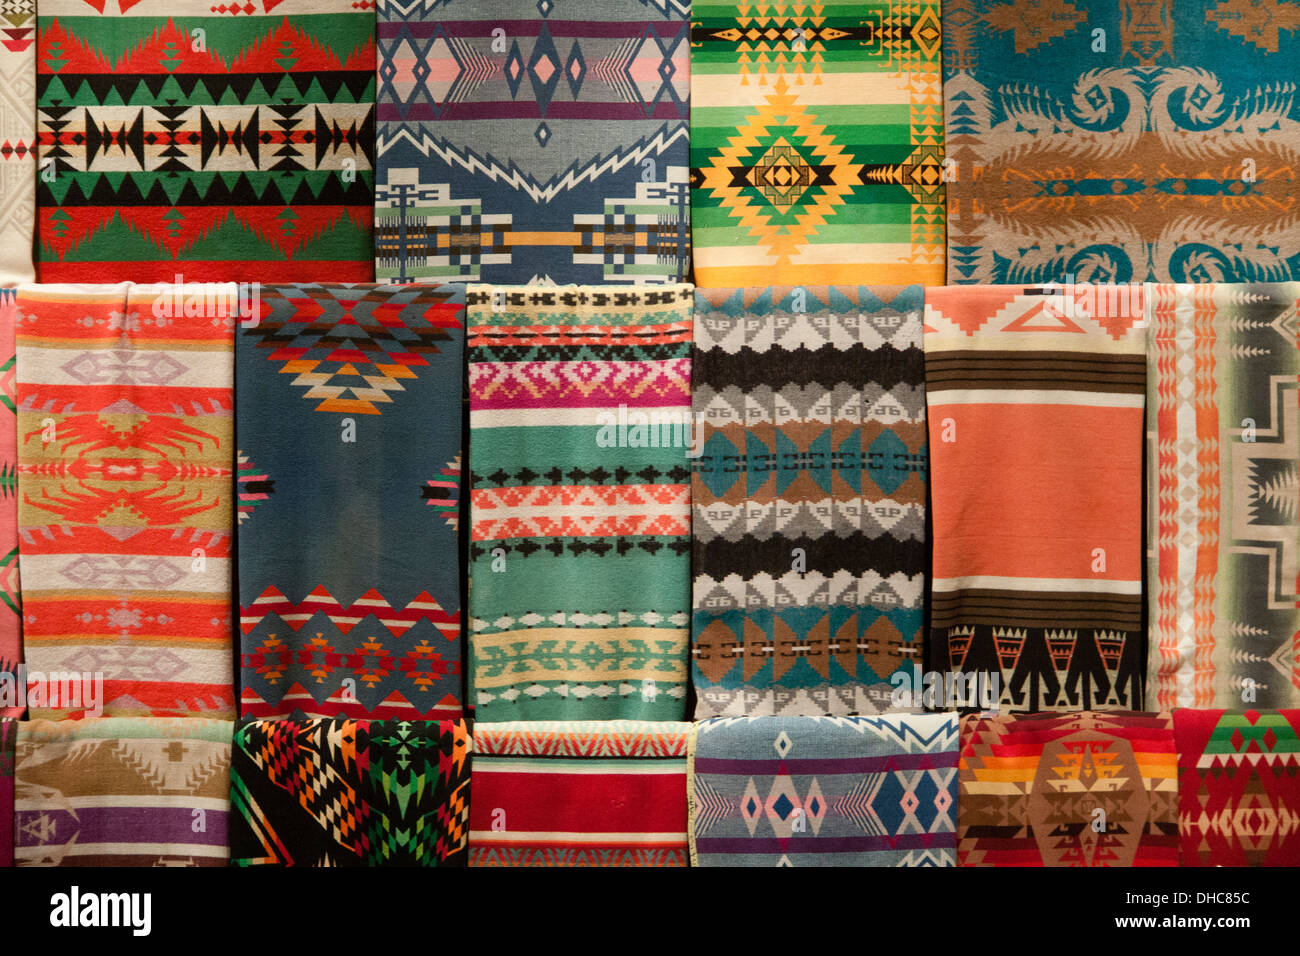 Indianer Decke Sammlung, Dale Chihuly, Garden of Glass, Seattle, Washington  Stockfotografie - Alamy